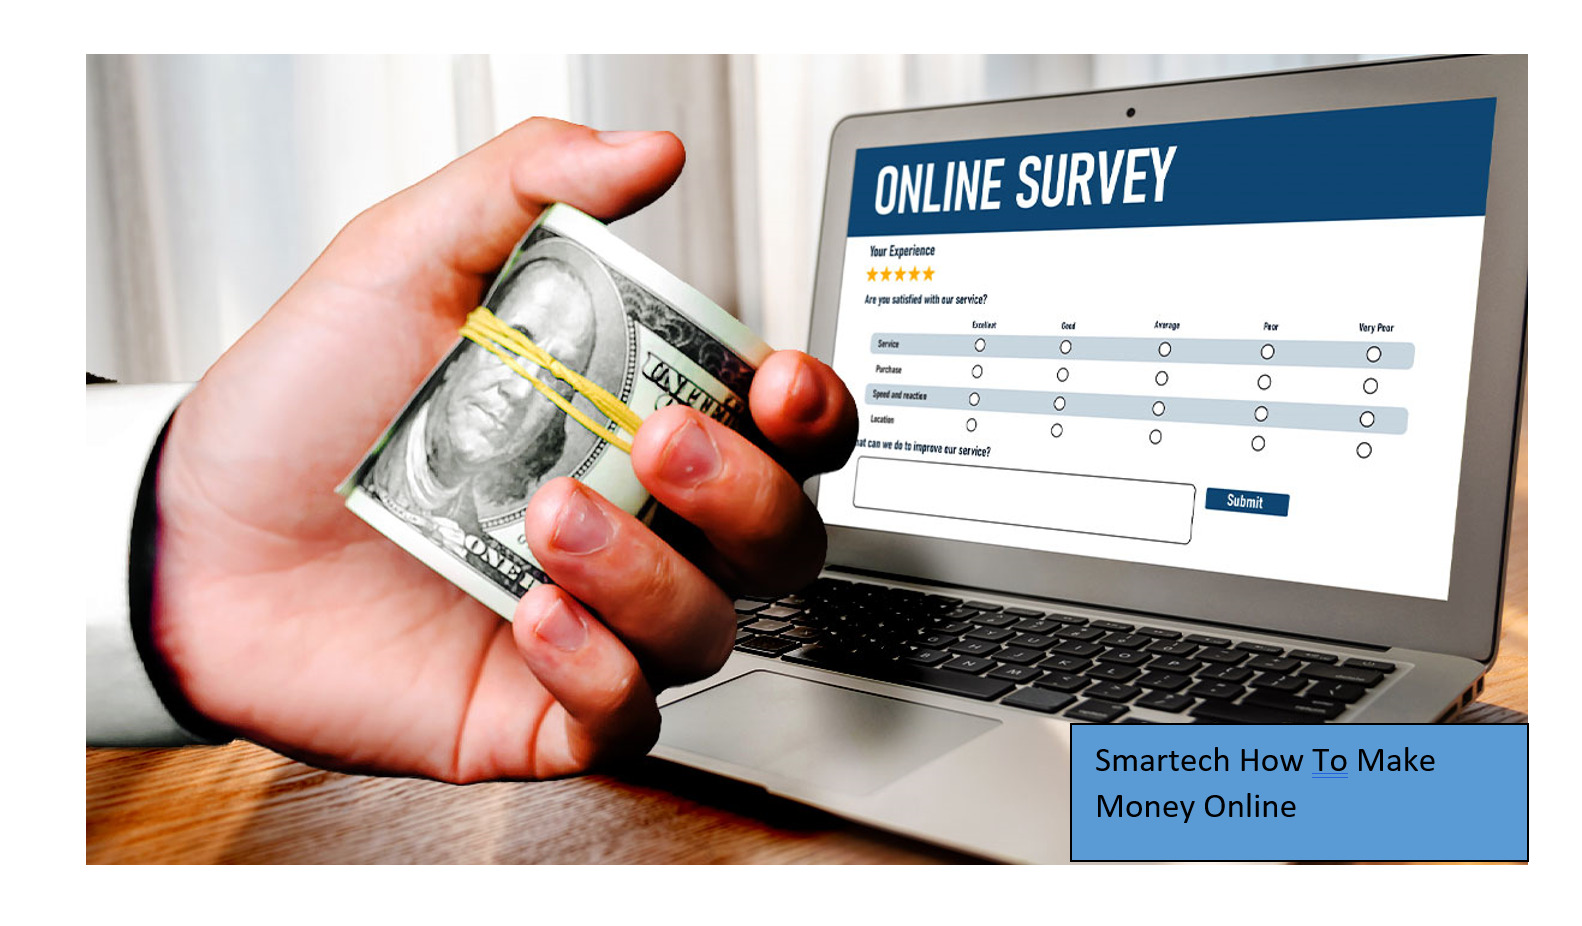 Smartech How To Make Money Online